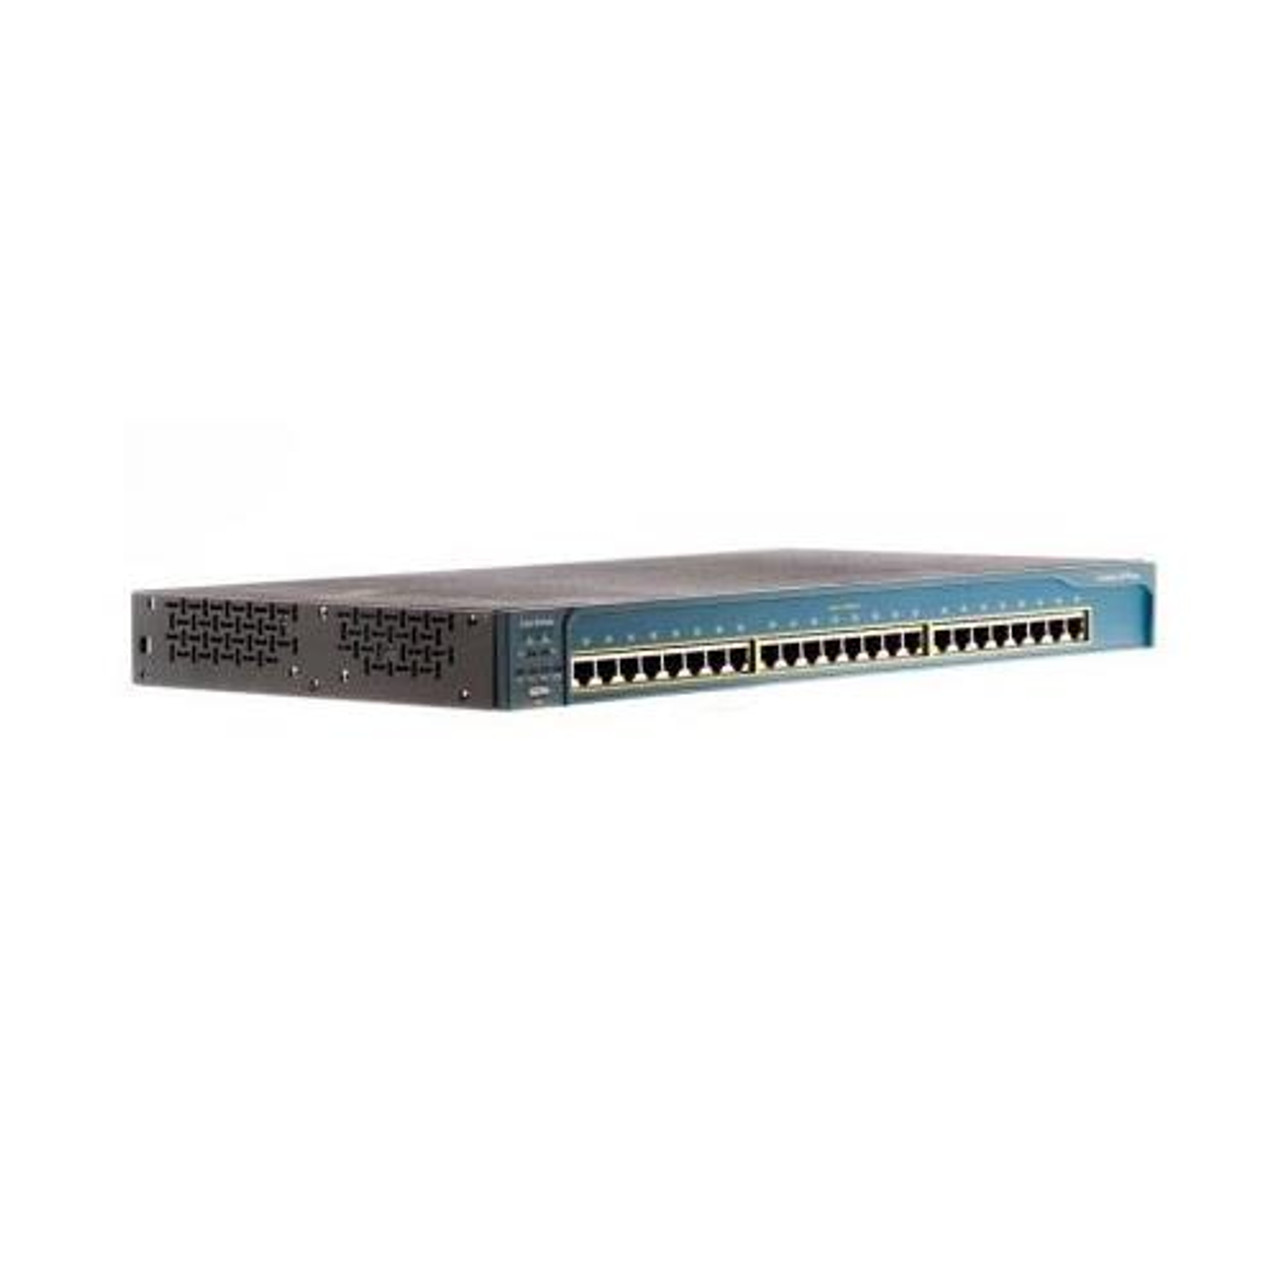 WS-C2950-24 Cisco Catalyst 2950 24-Ports 10/100Mbps RJ45 Port Switch  (Refurbished)